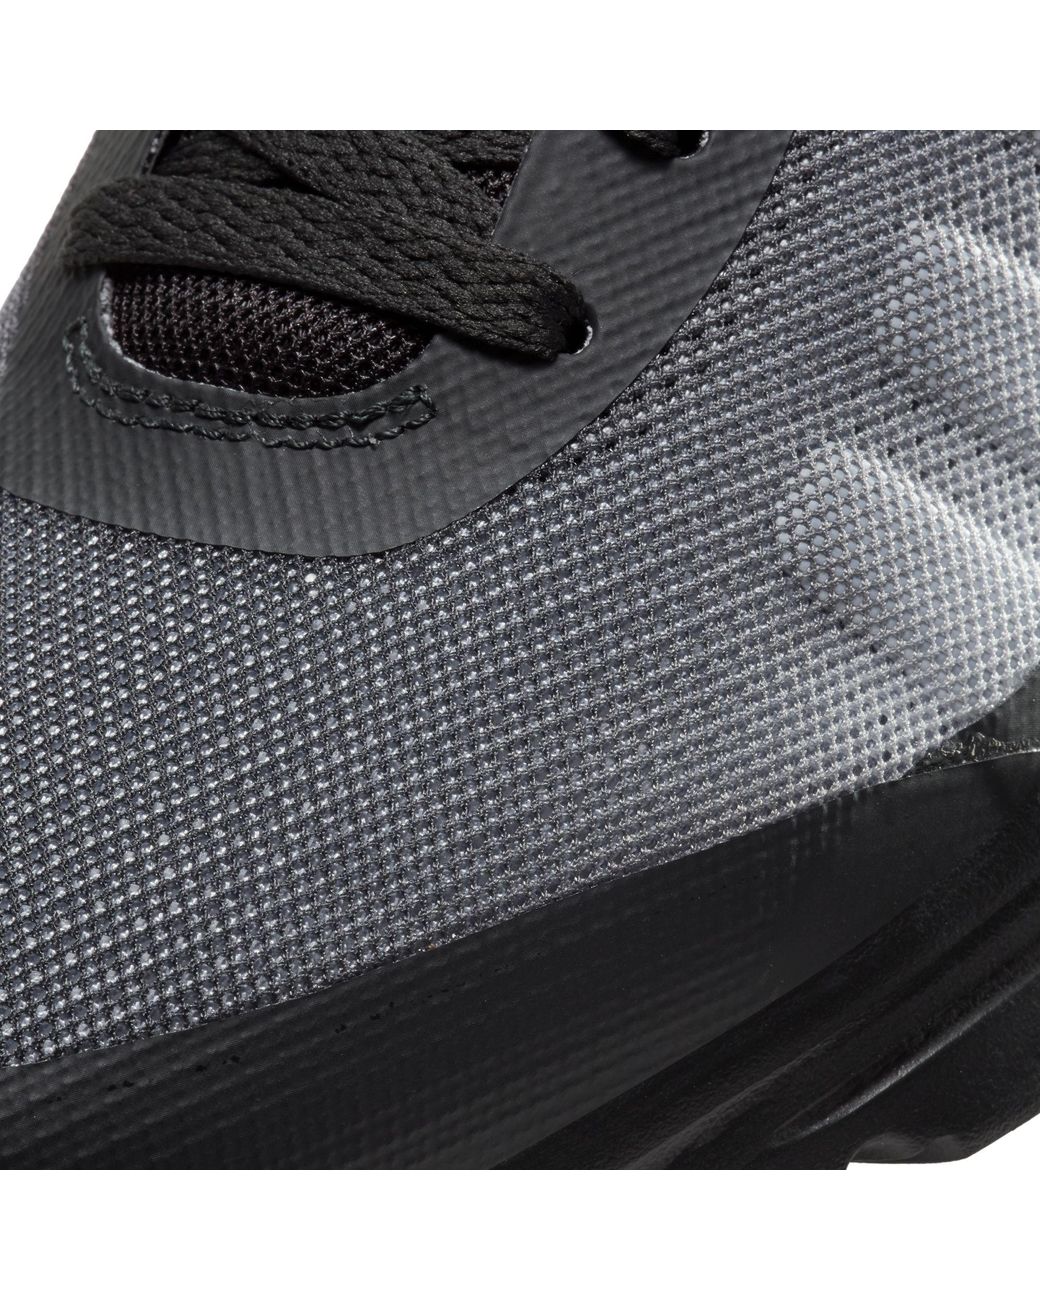 Nike Air Max Invigor Shoe Black for Men | Lyst Australia